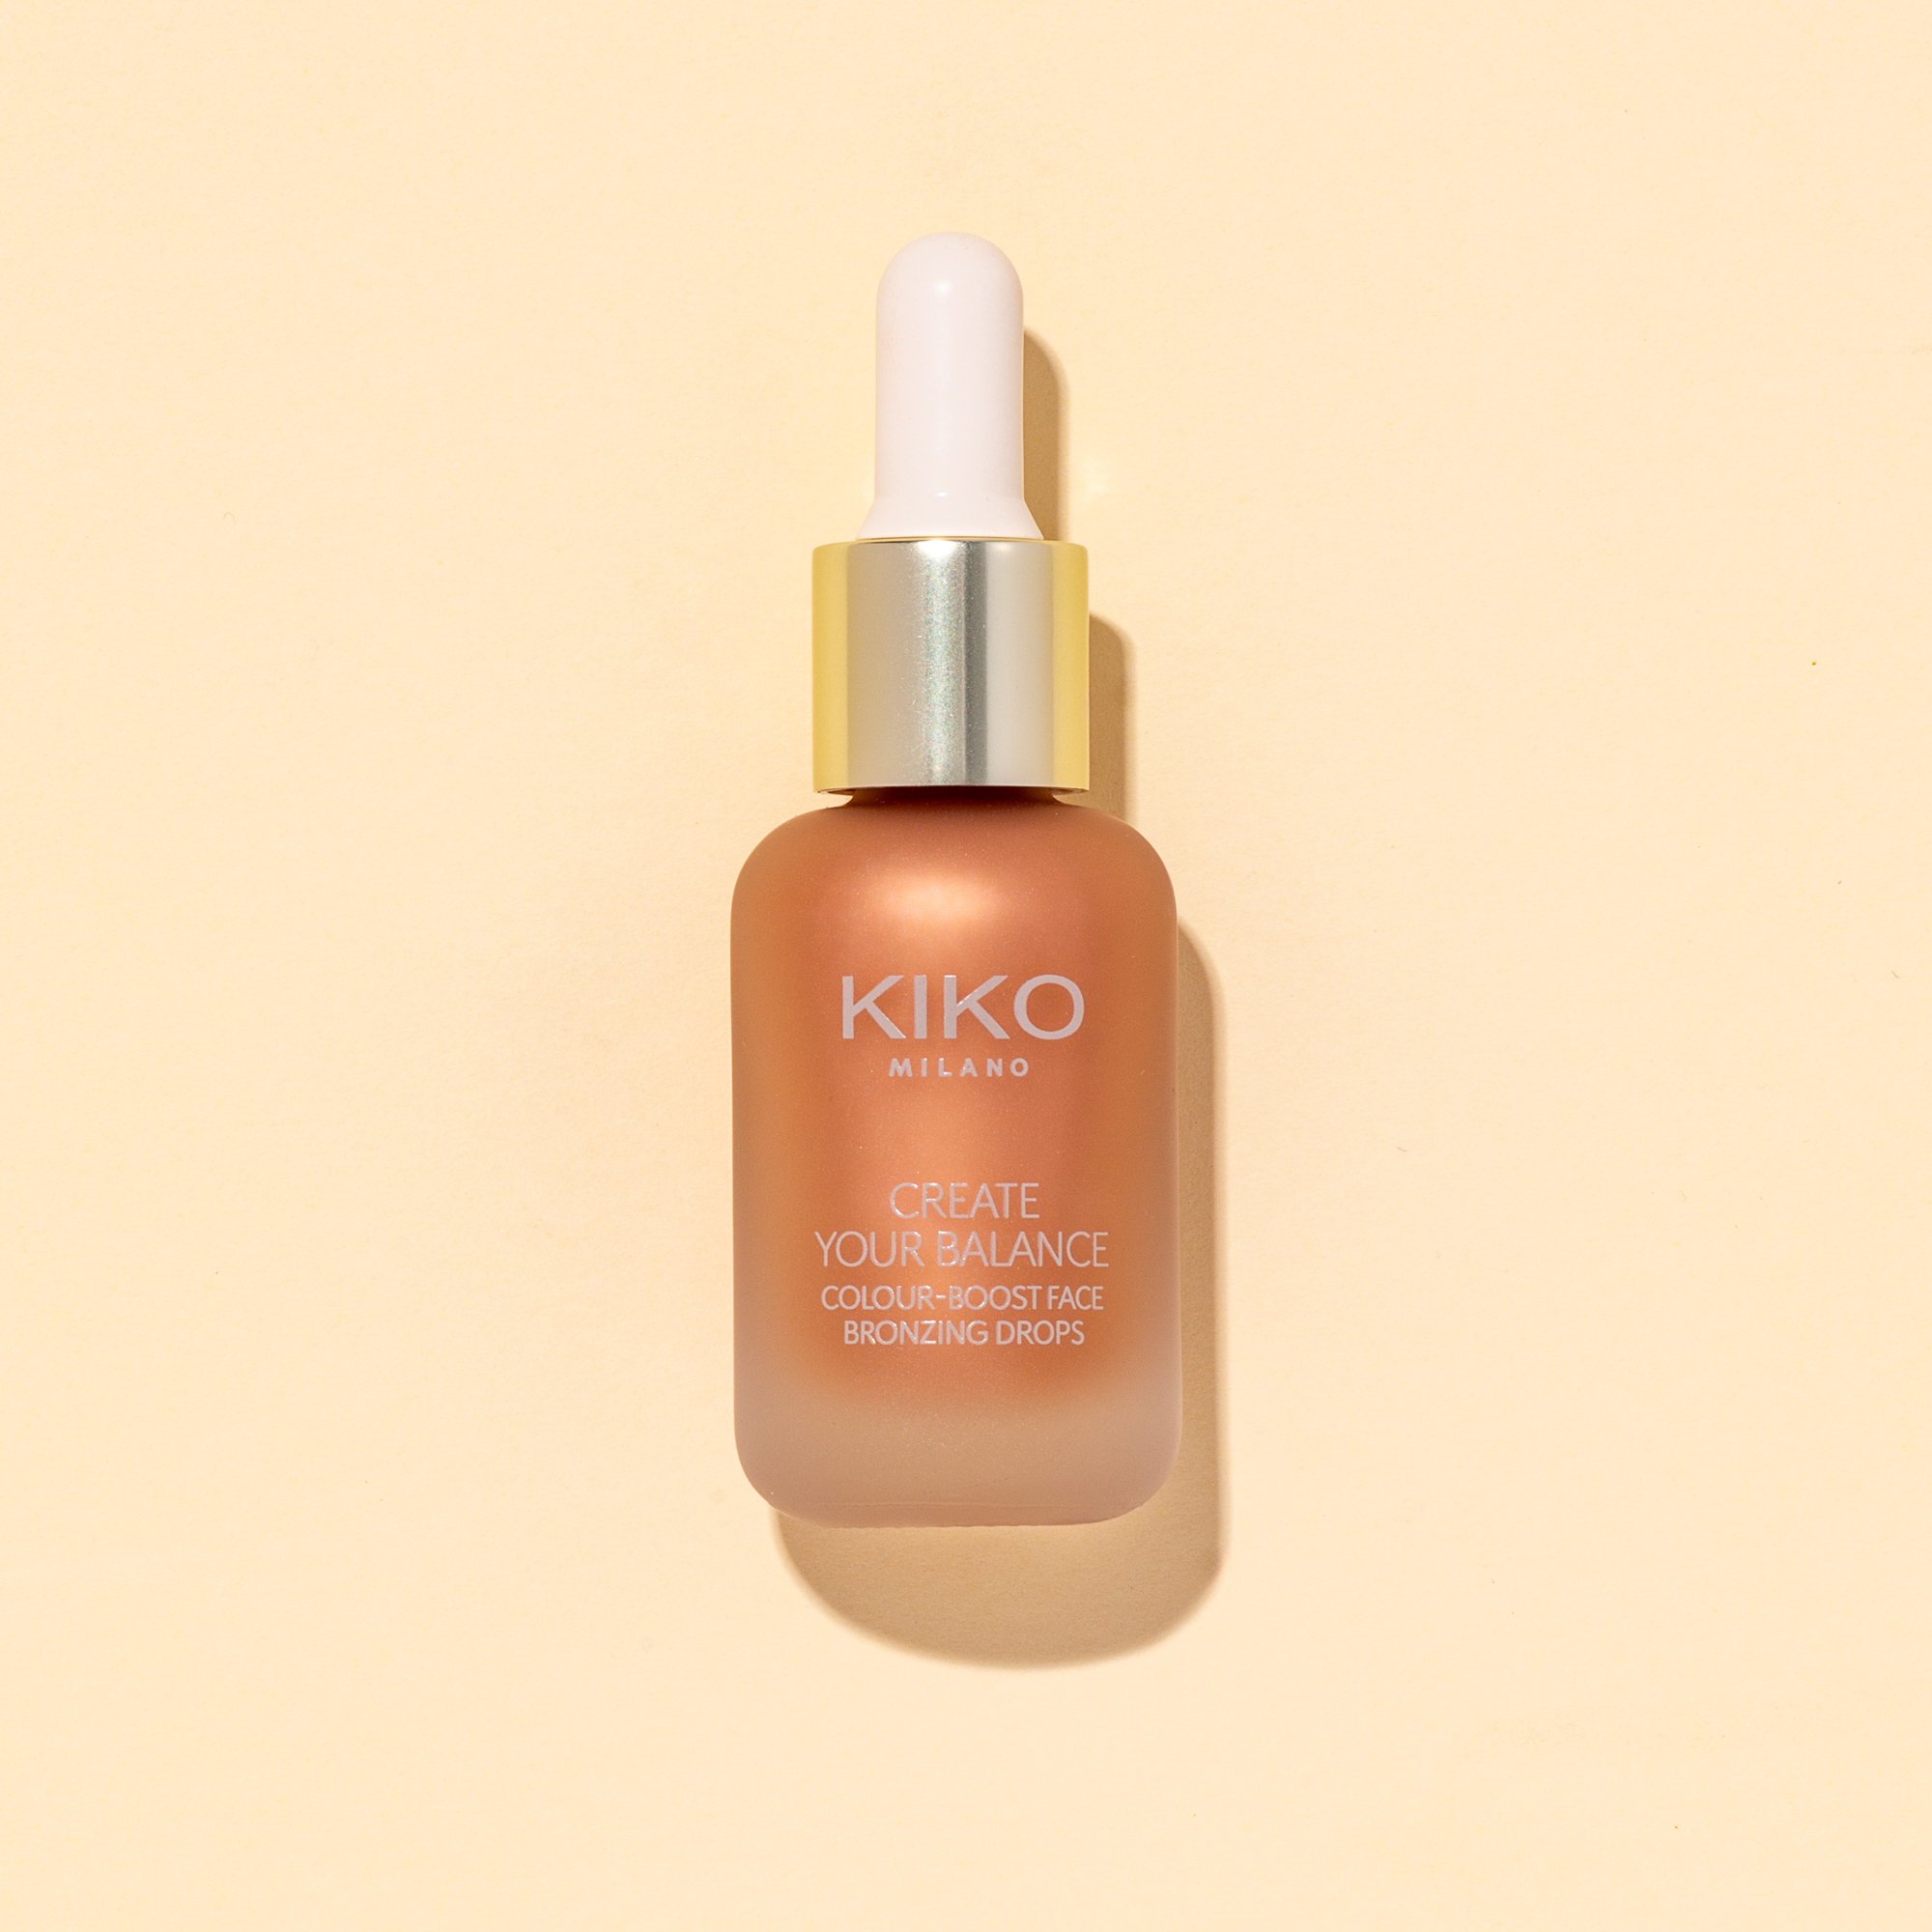 Kiko Create Your Balance Colour-Boost Face Bronzing Drops in Liquid Contour, £14.99